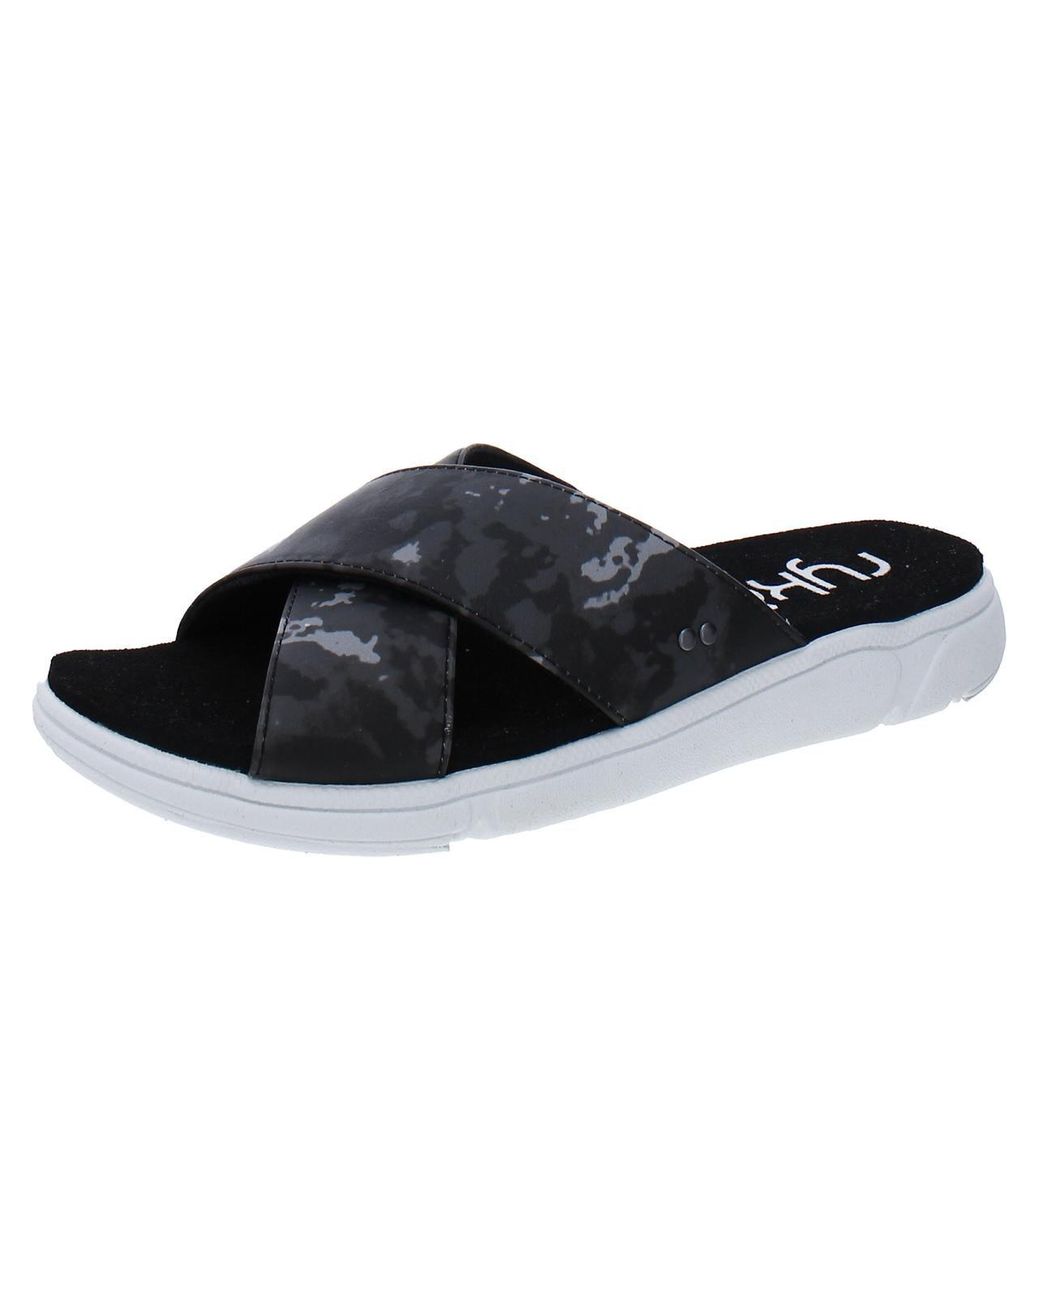 Ryka Malin Flat Slip On Slide Sandals in Black | Lyst